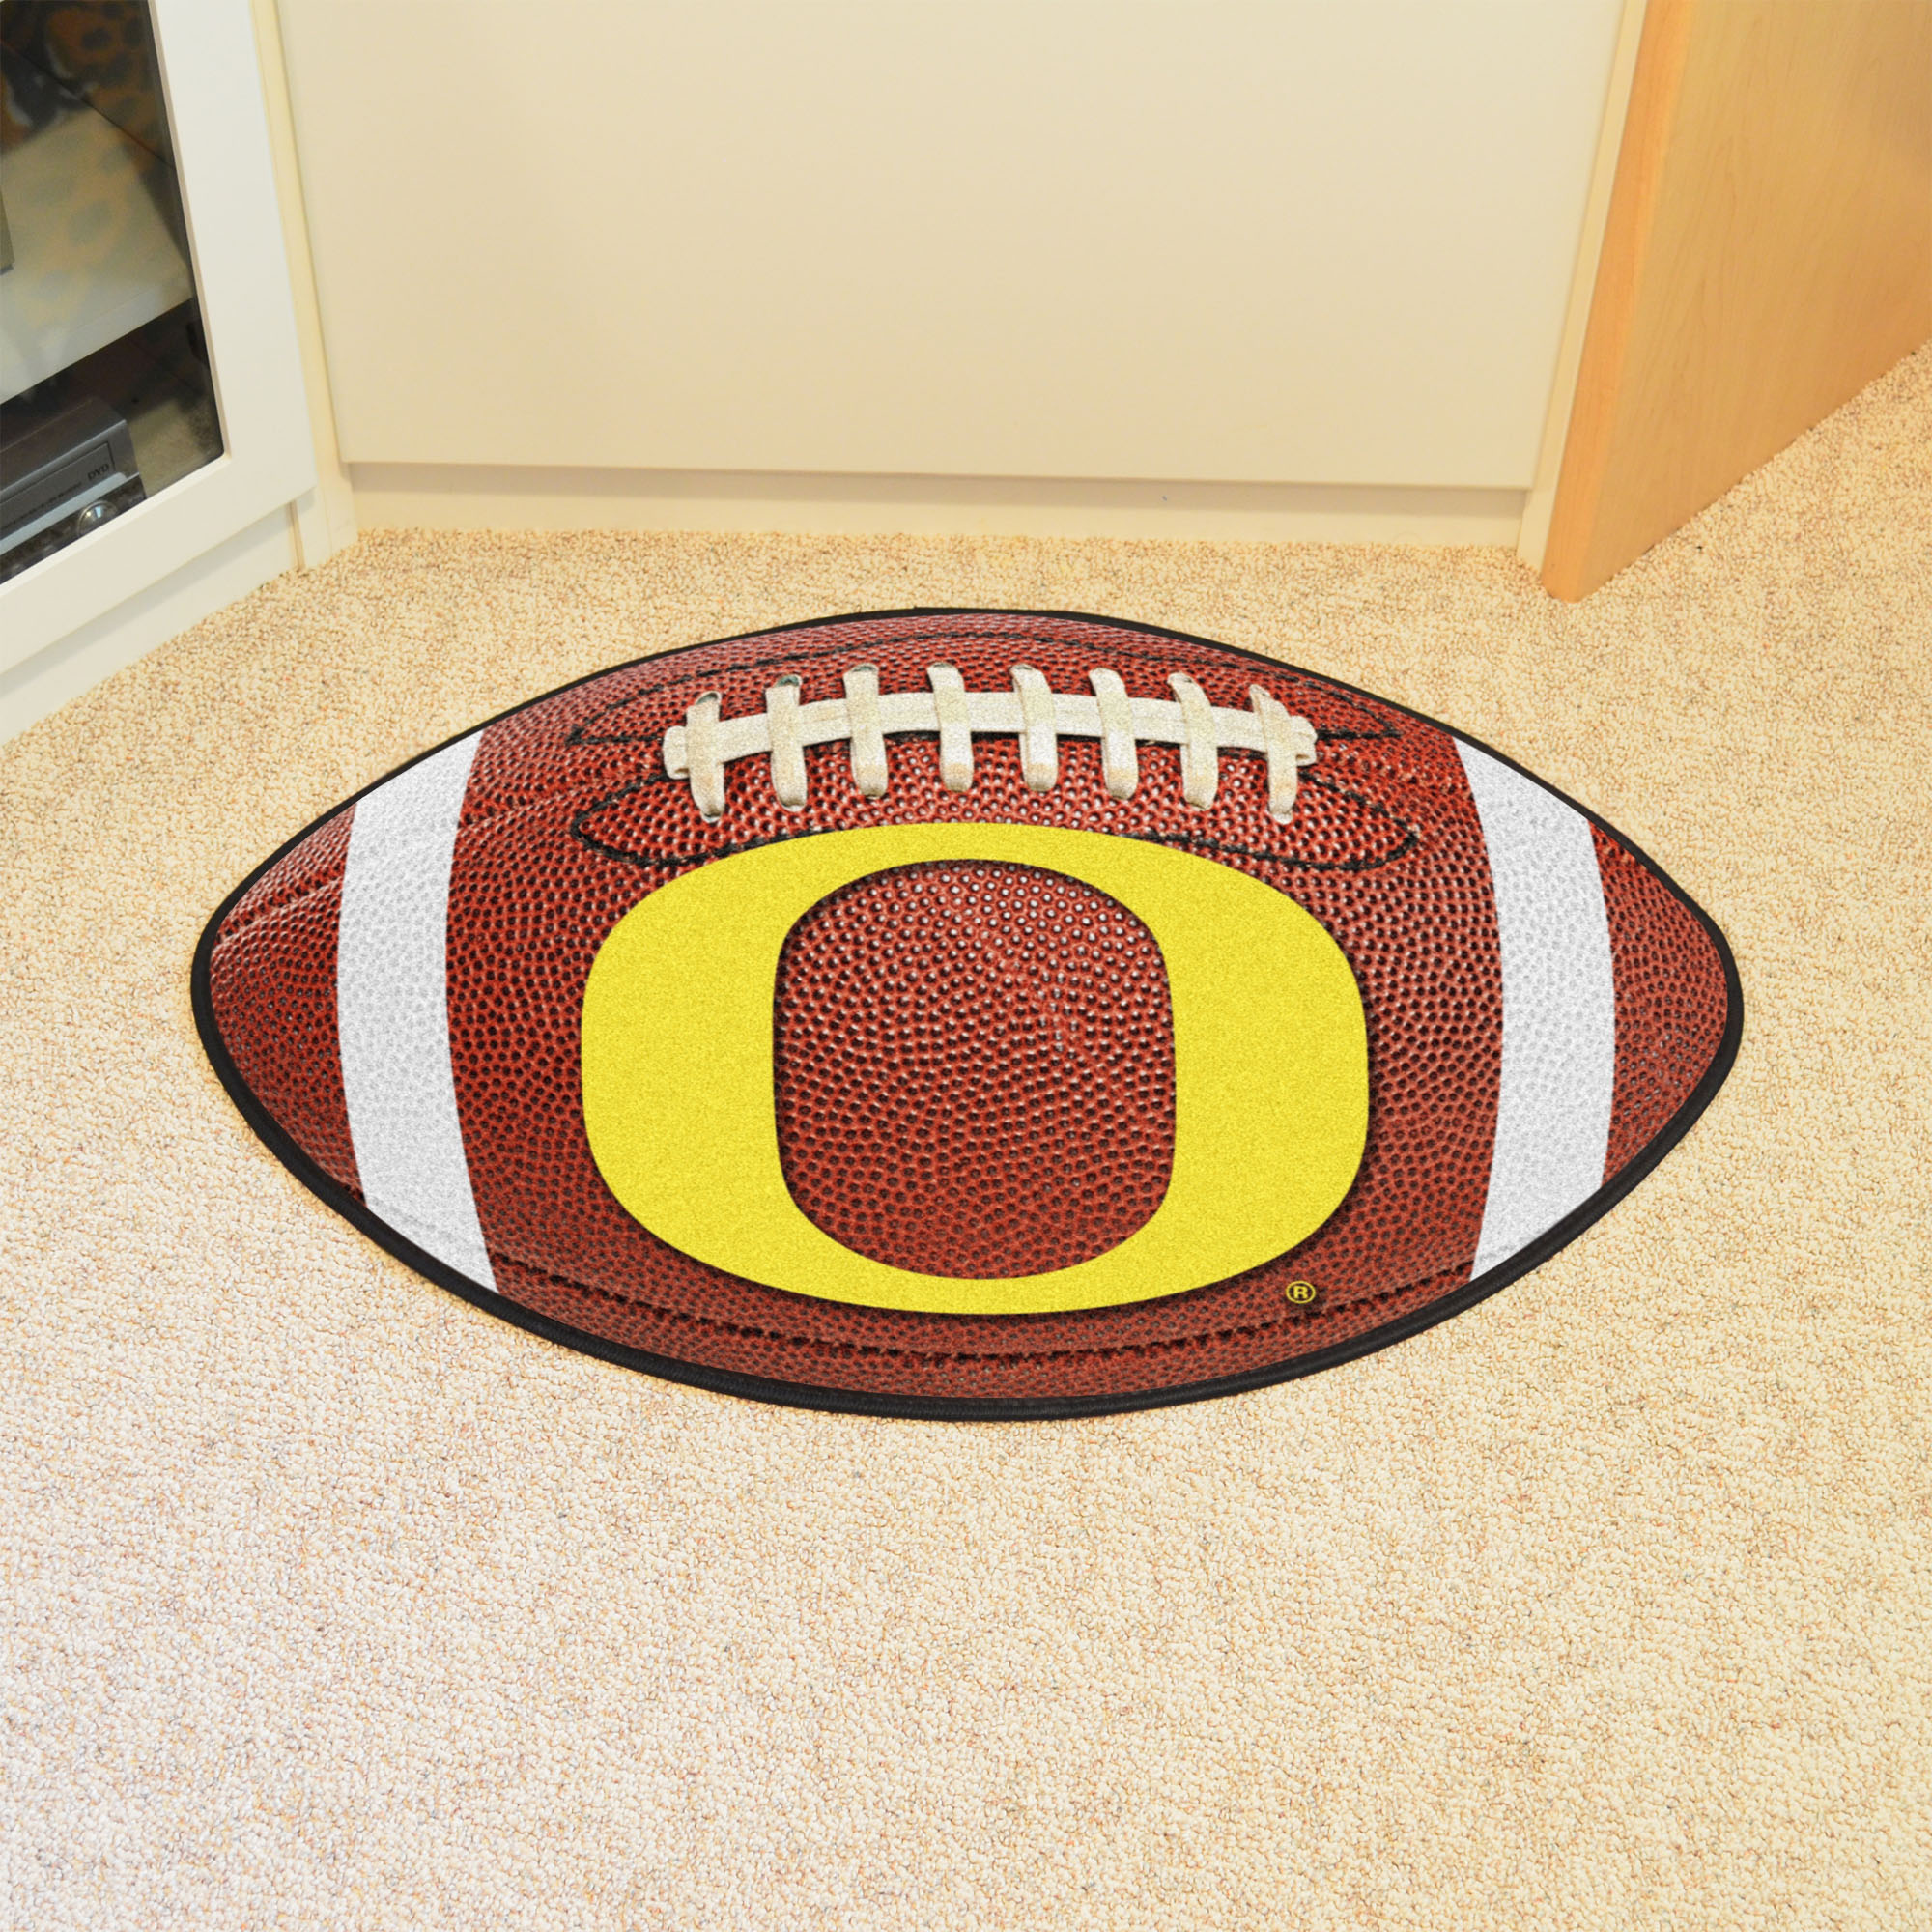 University of Oregon Ball Shaped Area Rugs (Ball Shaped Area Rugs: Football)